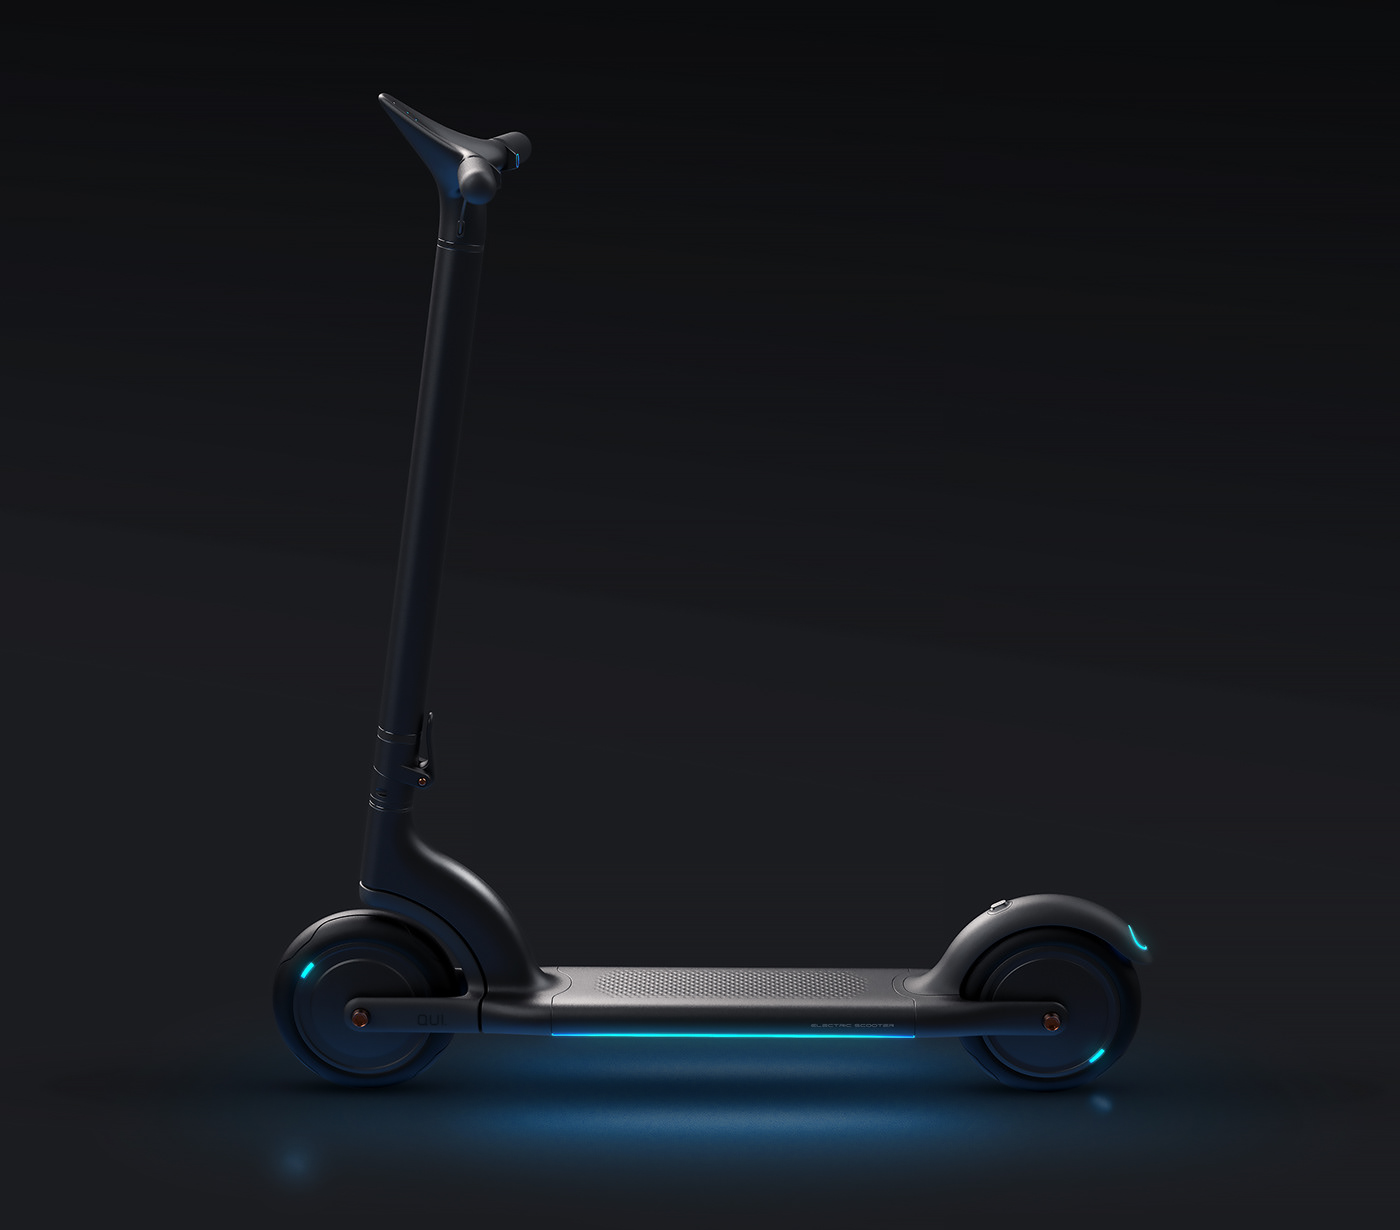 Scooter electric Bike wheel fold design Vehicle portable skateboard light